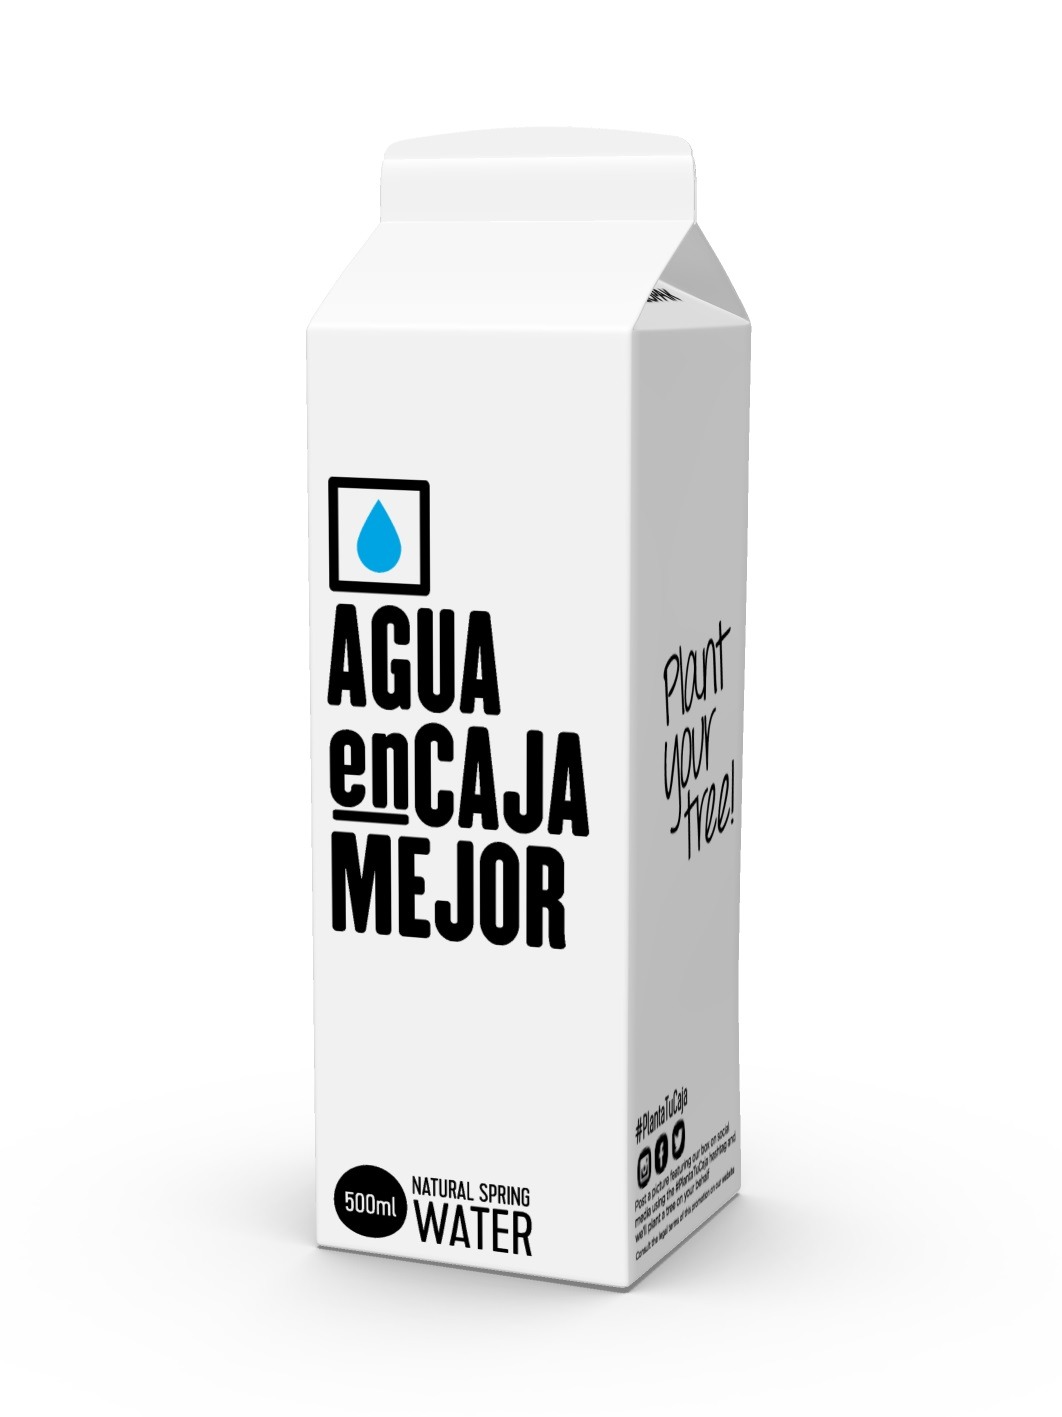 Fontsoria selects Elopak’s Pure-Pak cartons for Agua enCaja Mejor brand